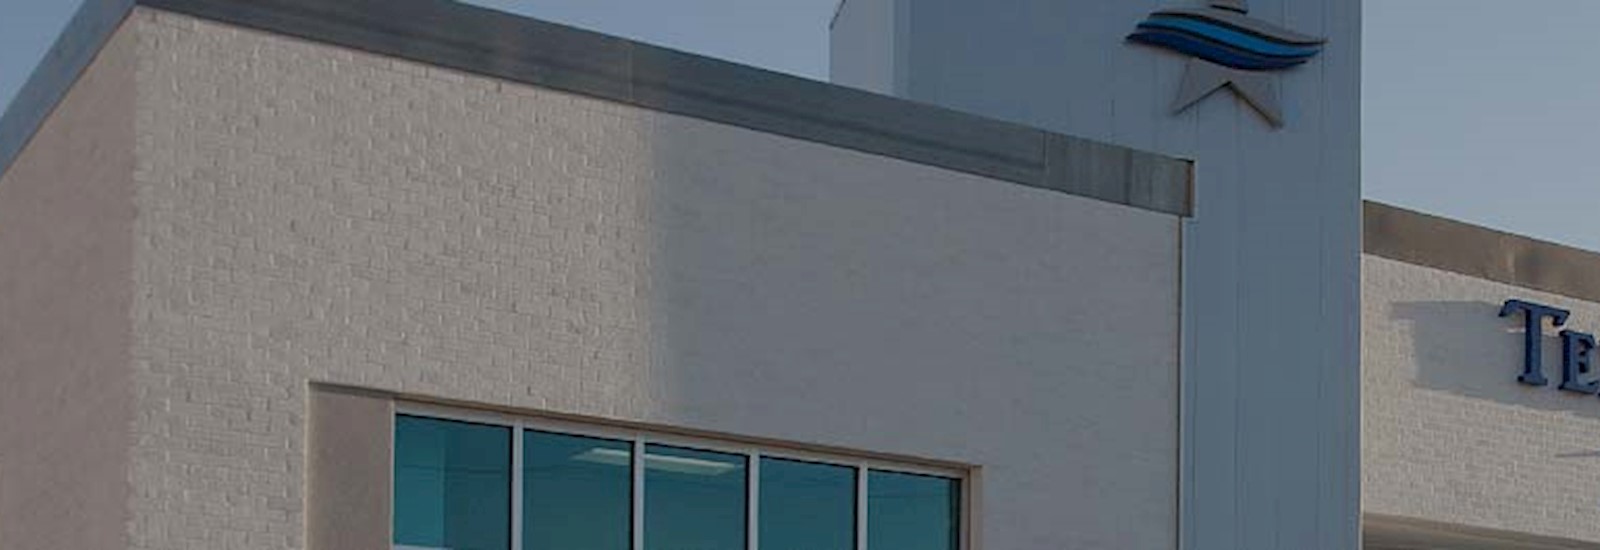 Header image - exterior of a TSB bank building